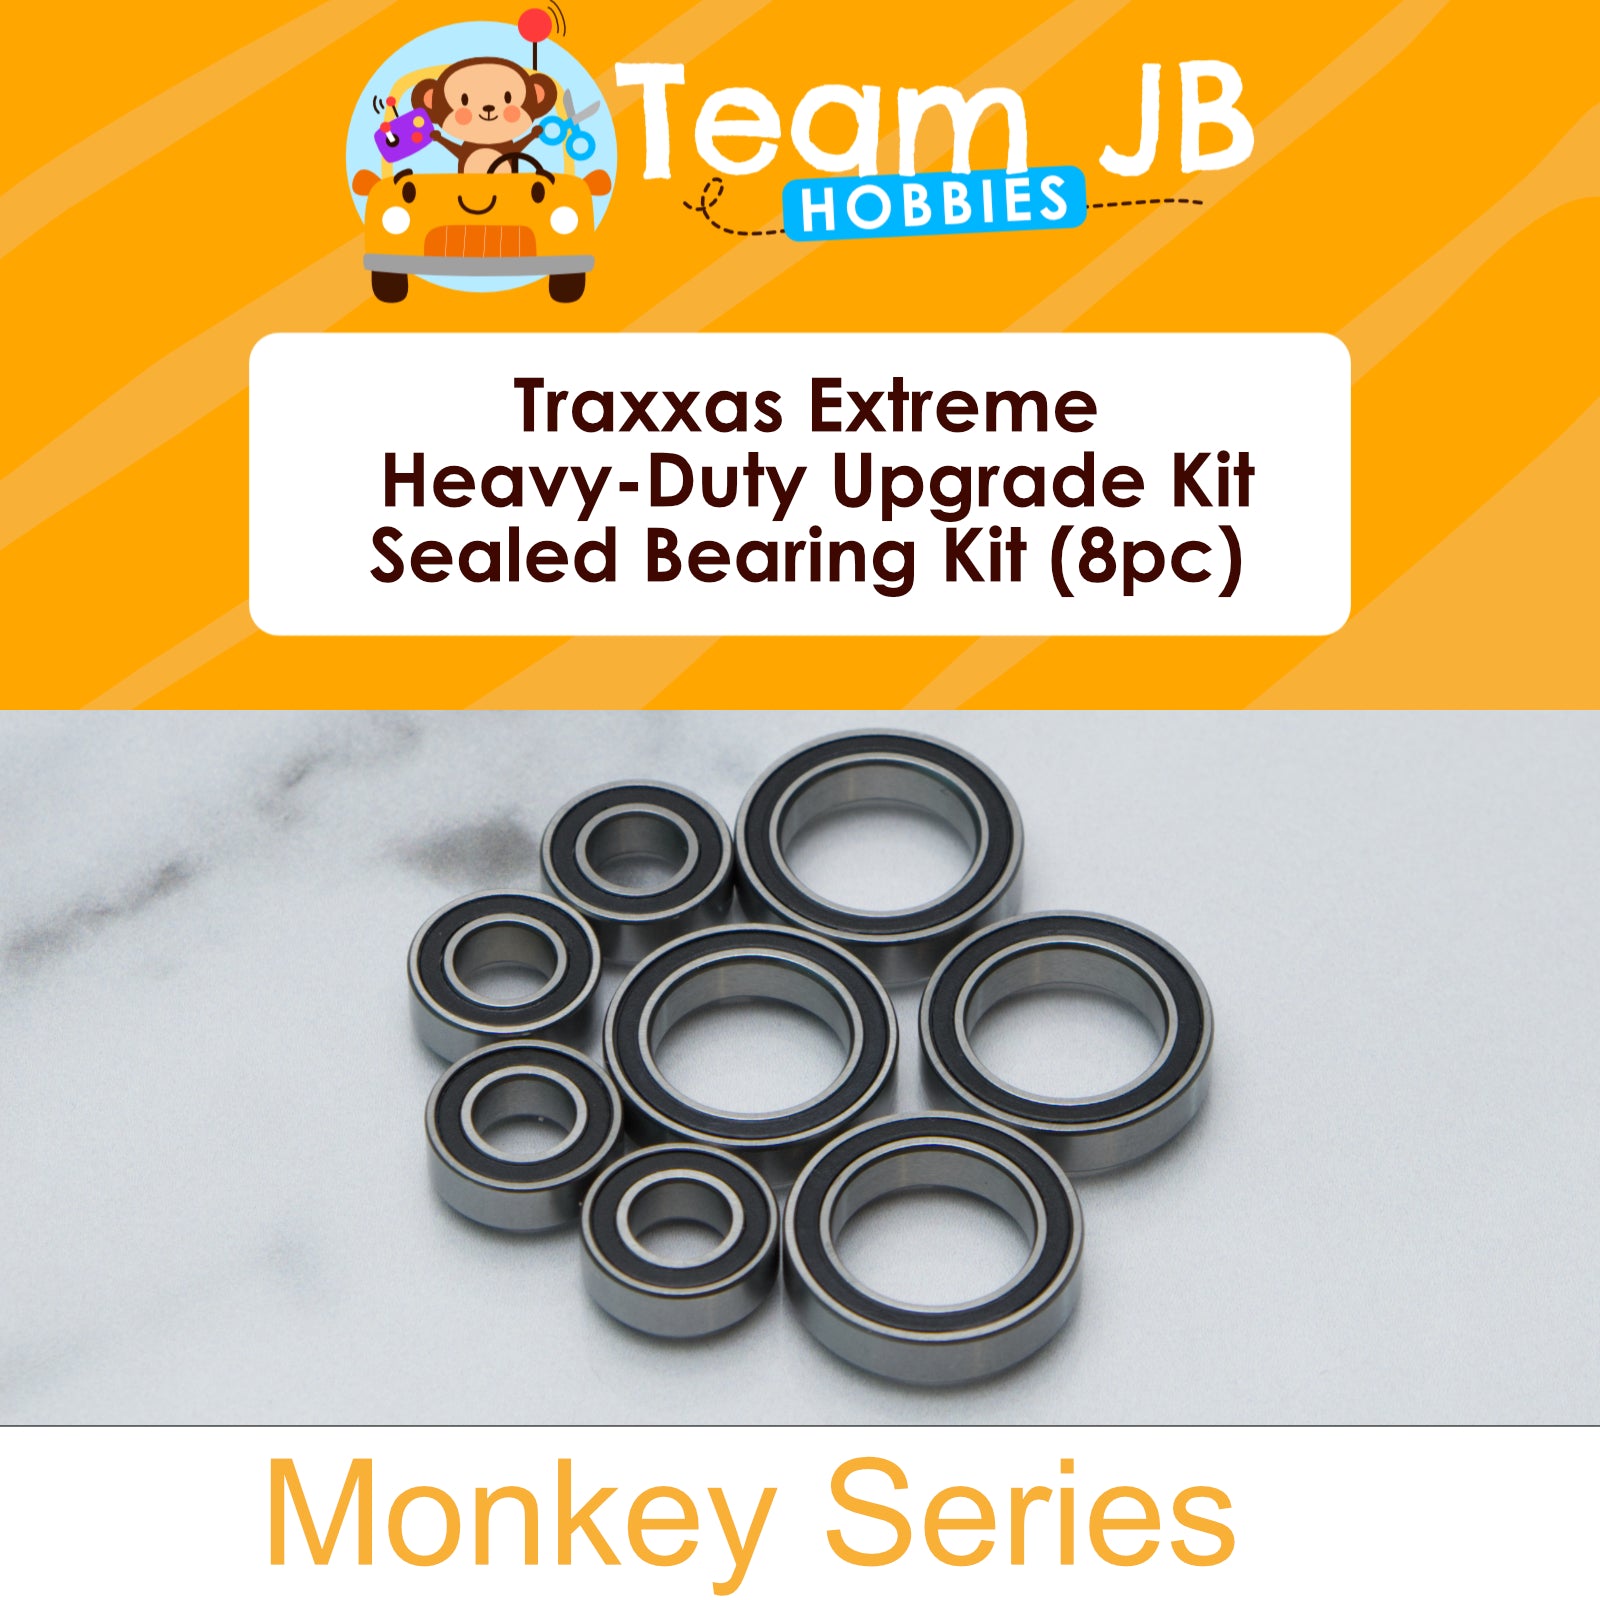 Traxxas Extreme Heavy-Duty Upgrade Kit - Sealed Bearing Kit